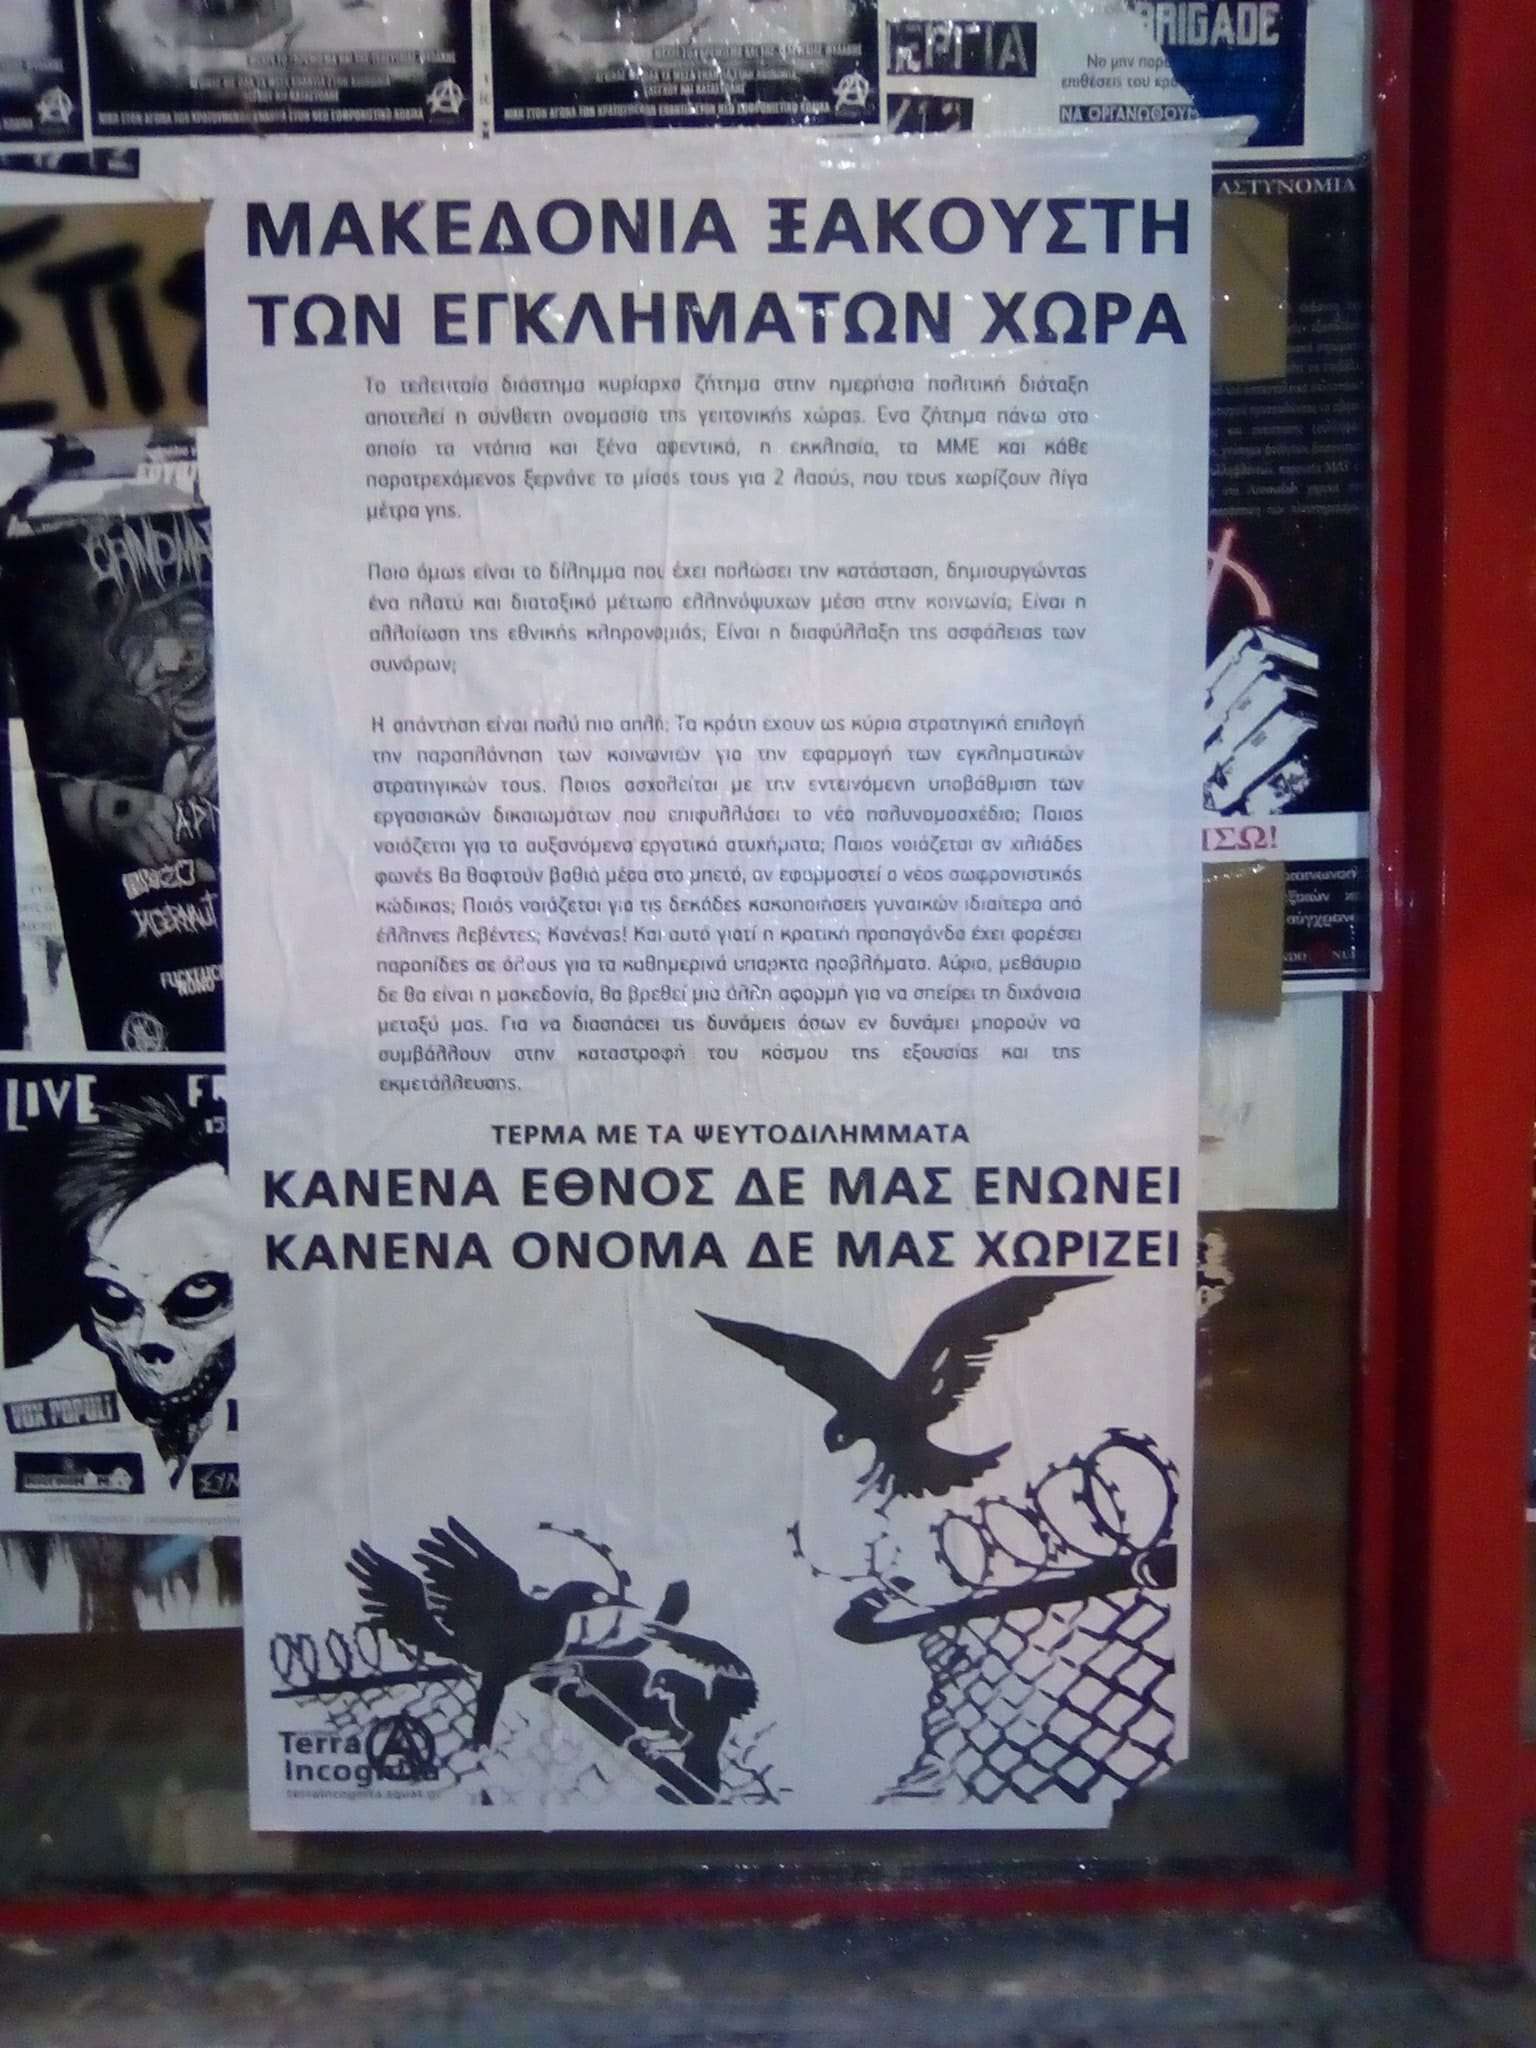 Terra Incognita, Θεσσαλονίκη: Παρεμβάσεις με γιγαντοαφίσσες για το ζήτημα της Μακεδονίας